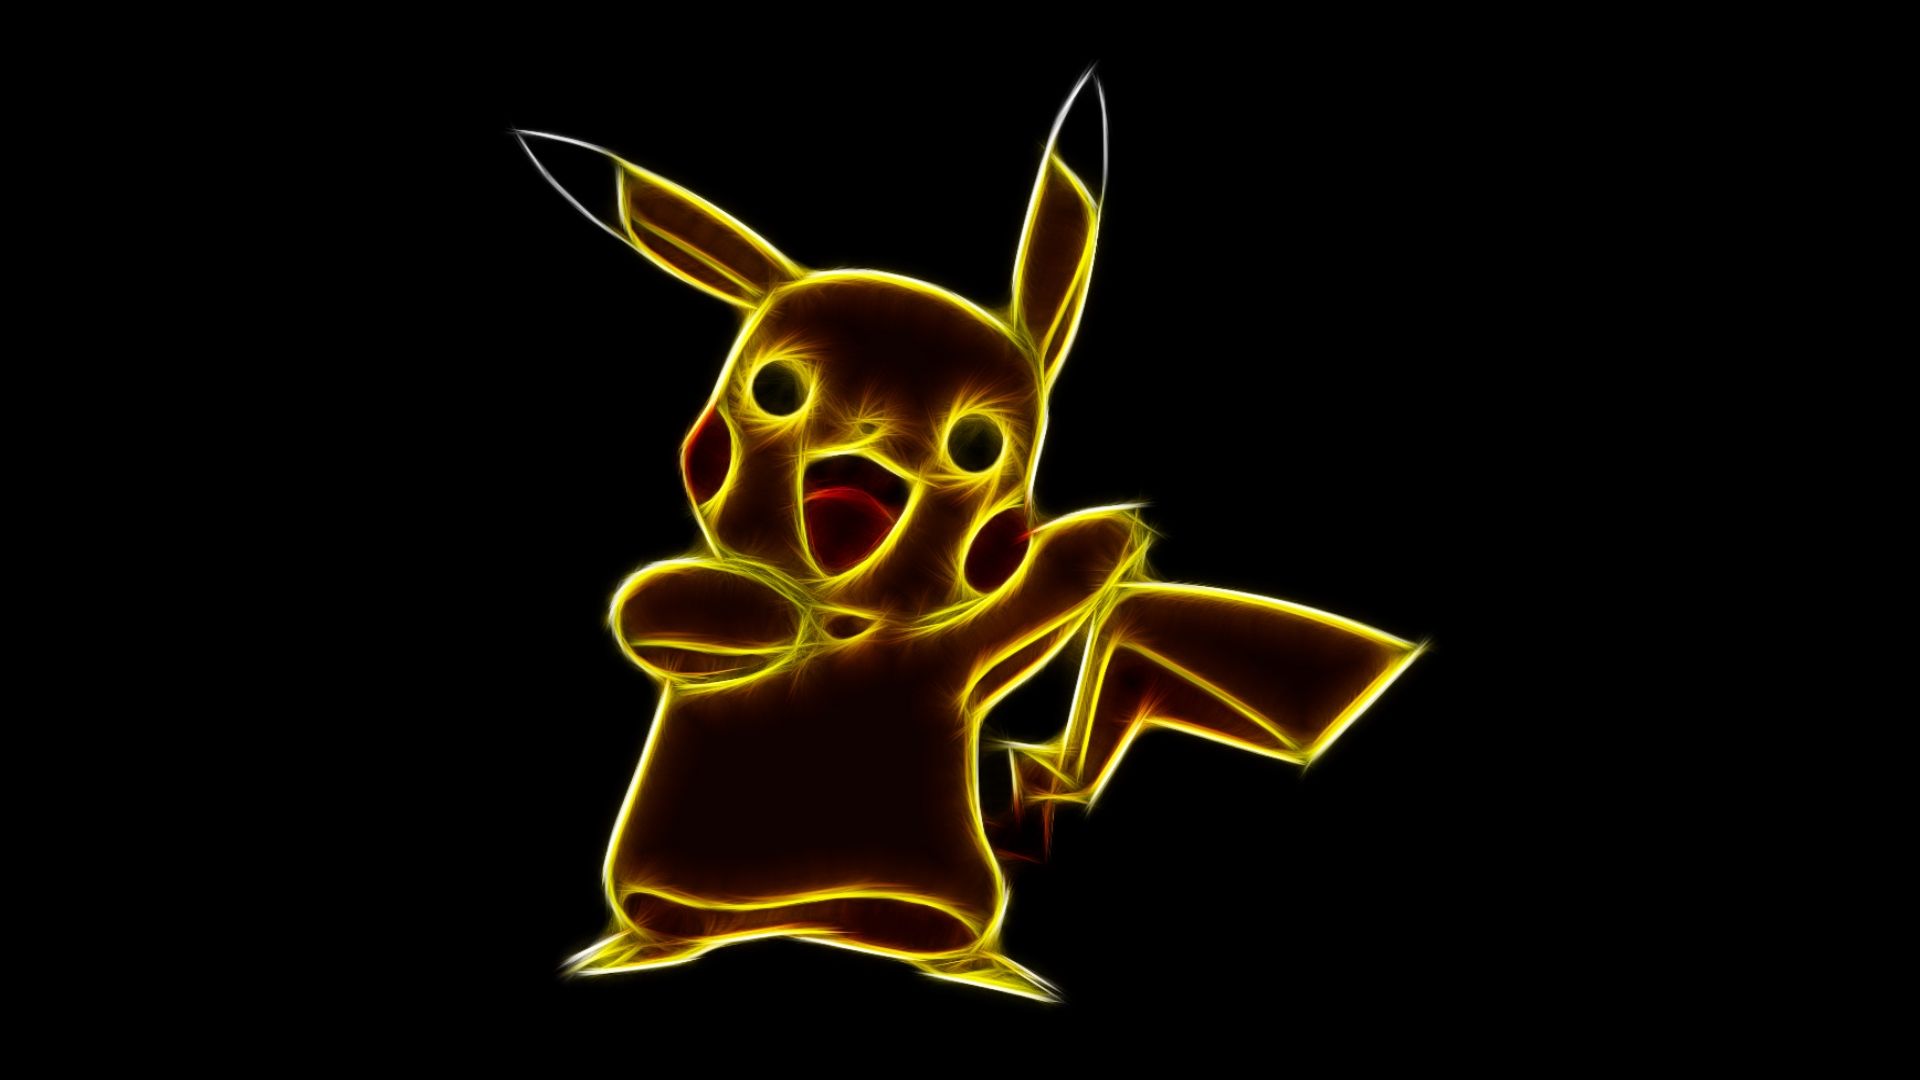 A neon image of Pikachu on a black background - Pikachu